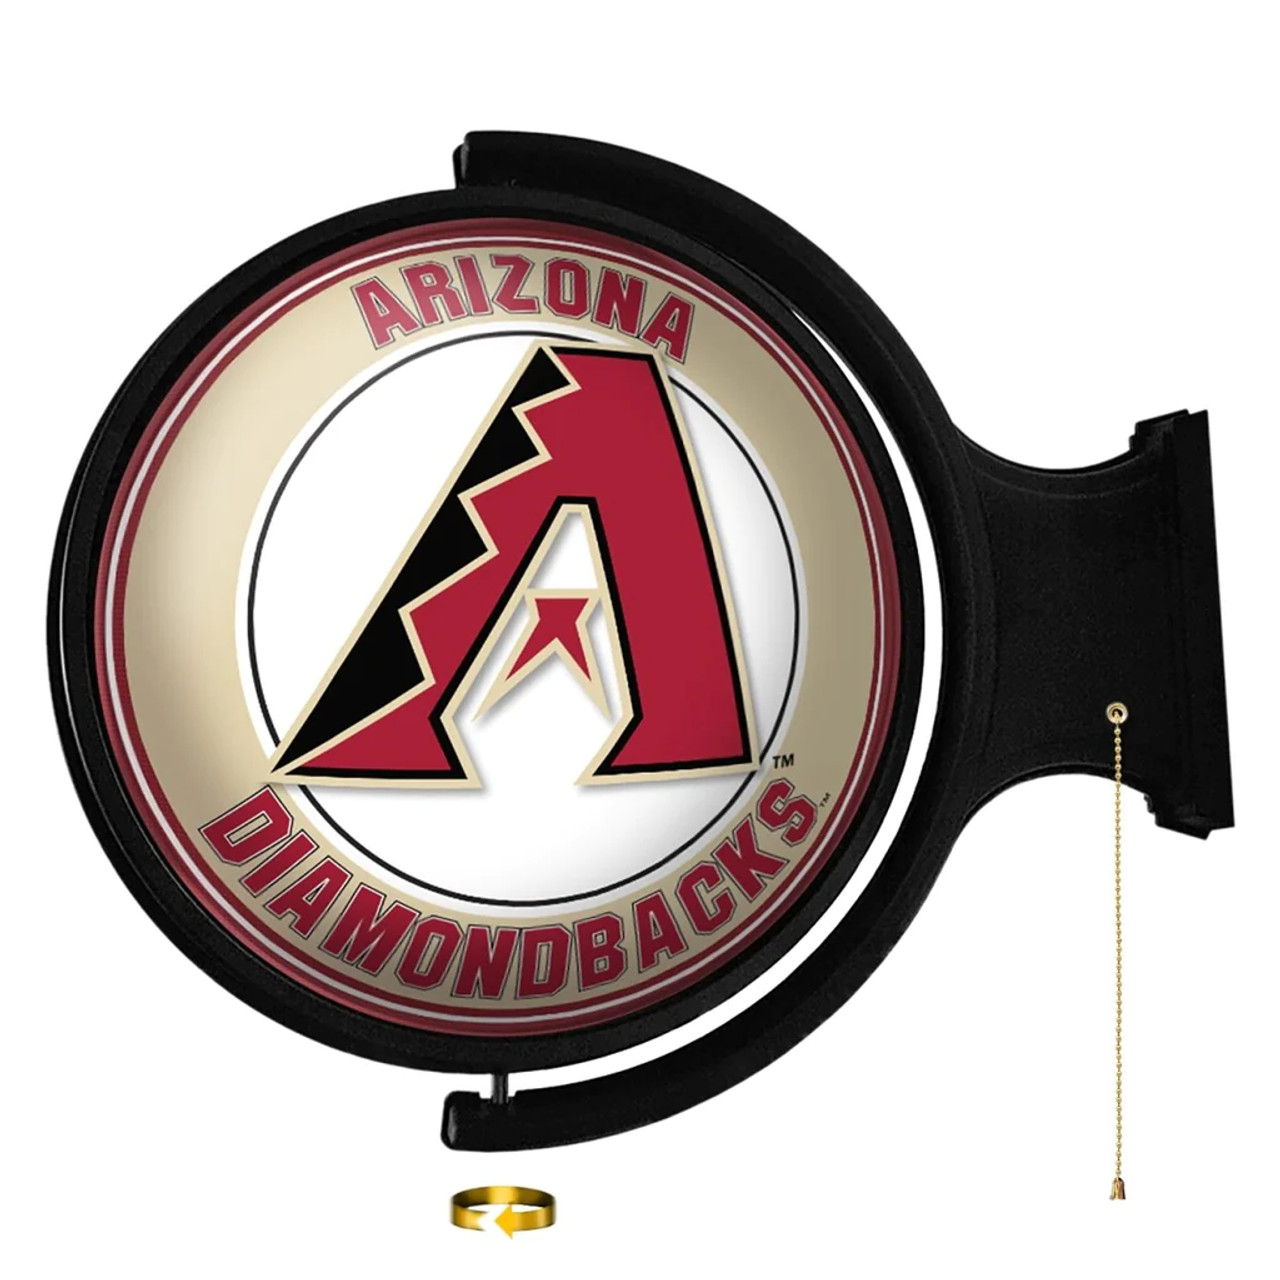 MBARIZ-115-01, Arizona, ARI, AZ,  Diamondbacks,  Original, Round, Rotating, Lighted, Wall, Sign, The Fan-Brand, 704384950103, LED
